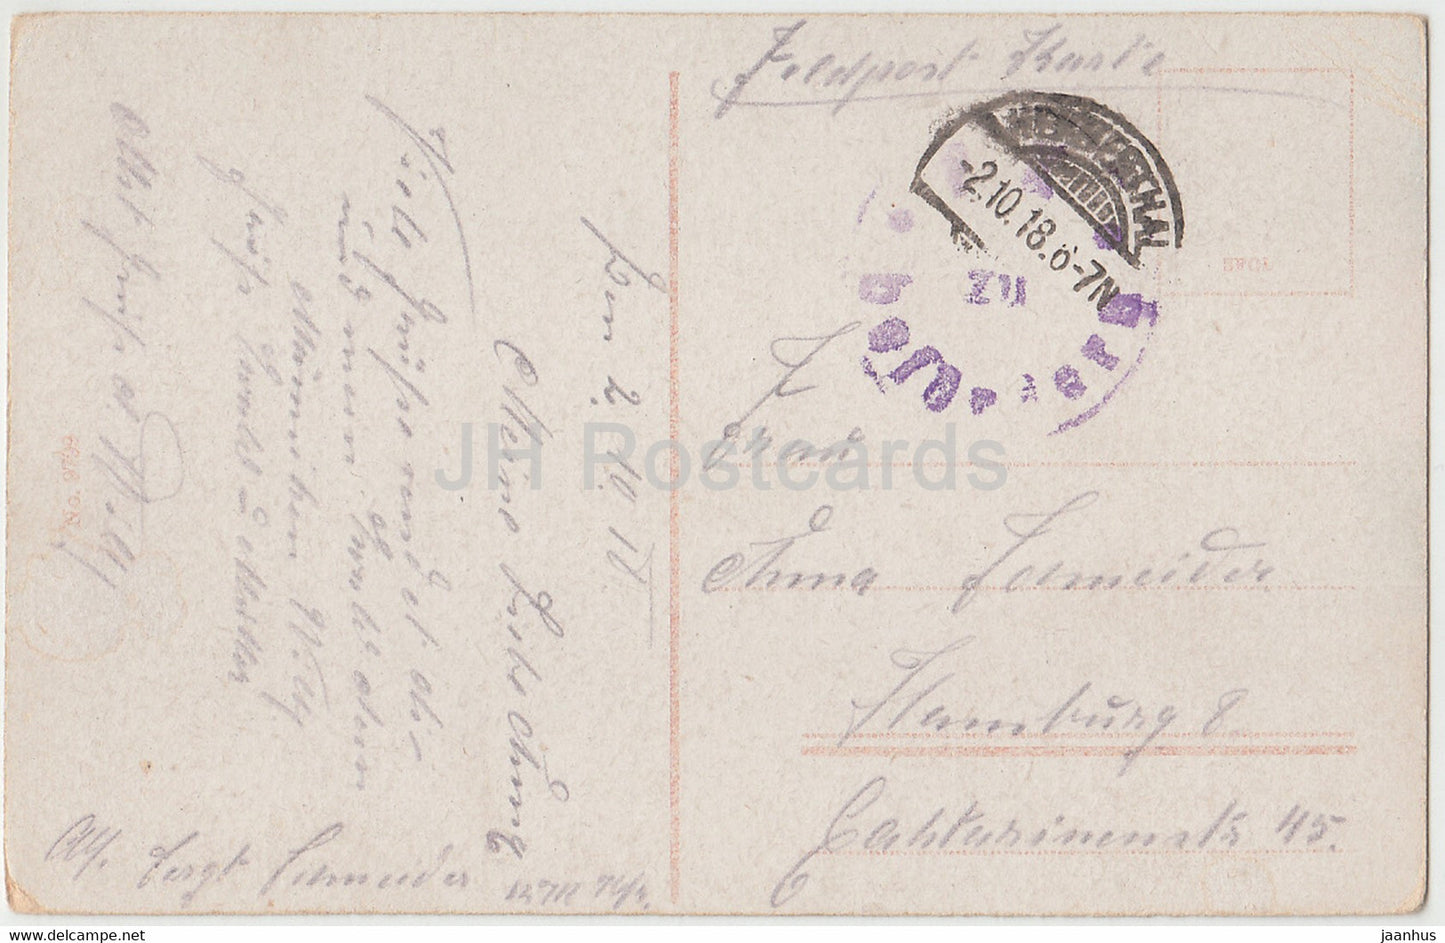 Herbesthal - Bahnhof - Zug - Bahnhof - Feldpost - alte Postkarte - 1918 - Belgien - gebraucht